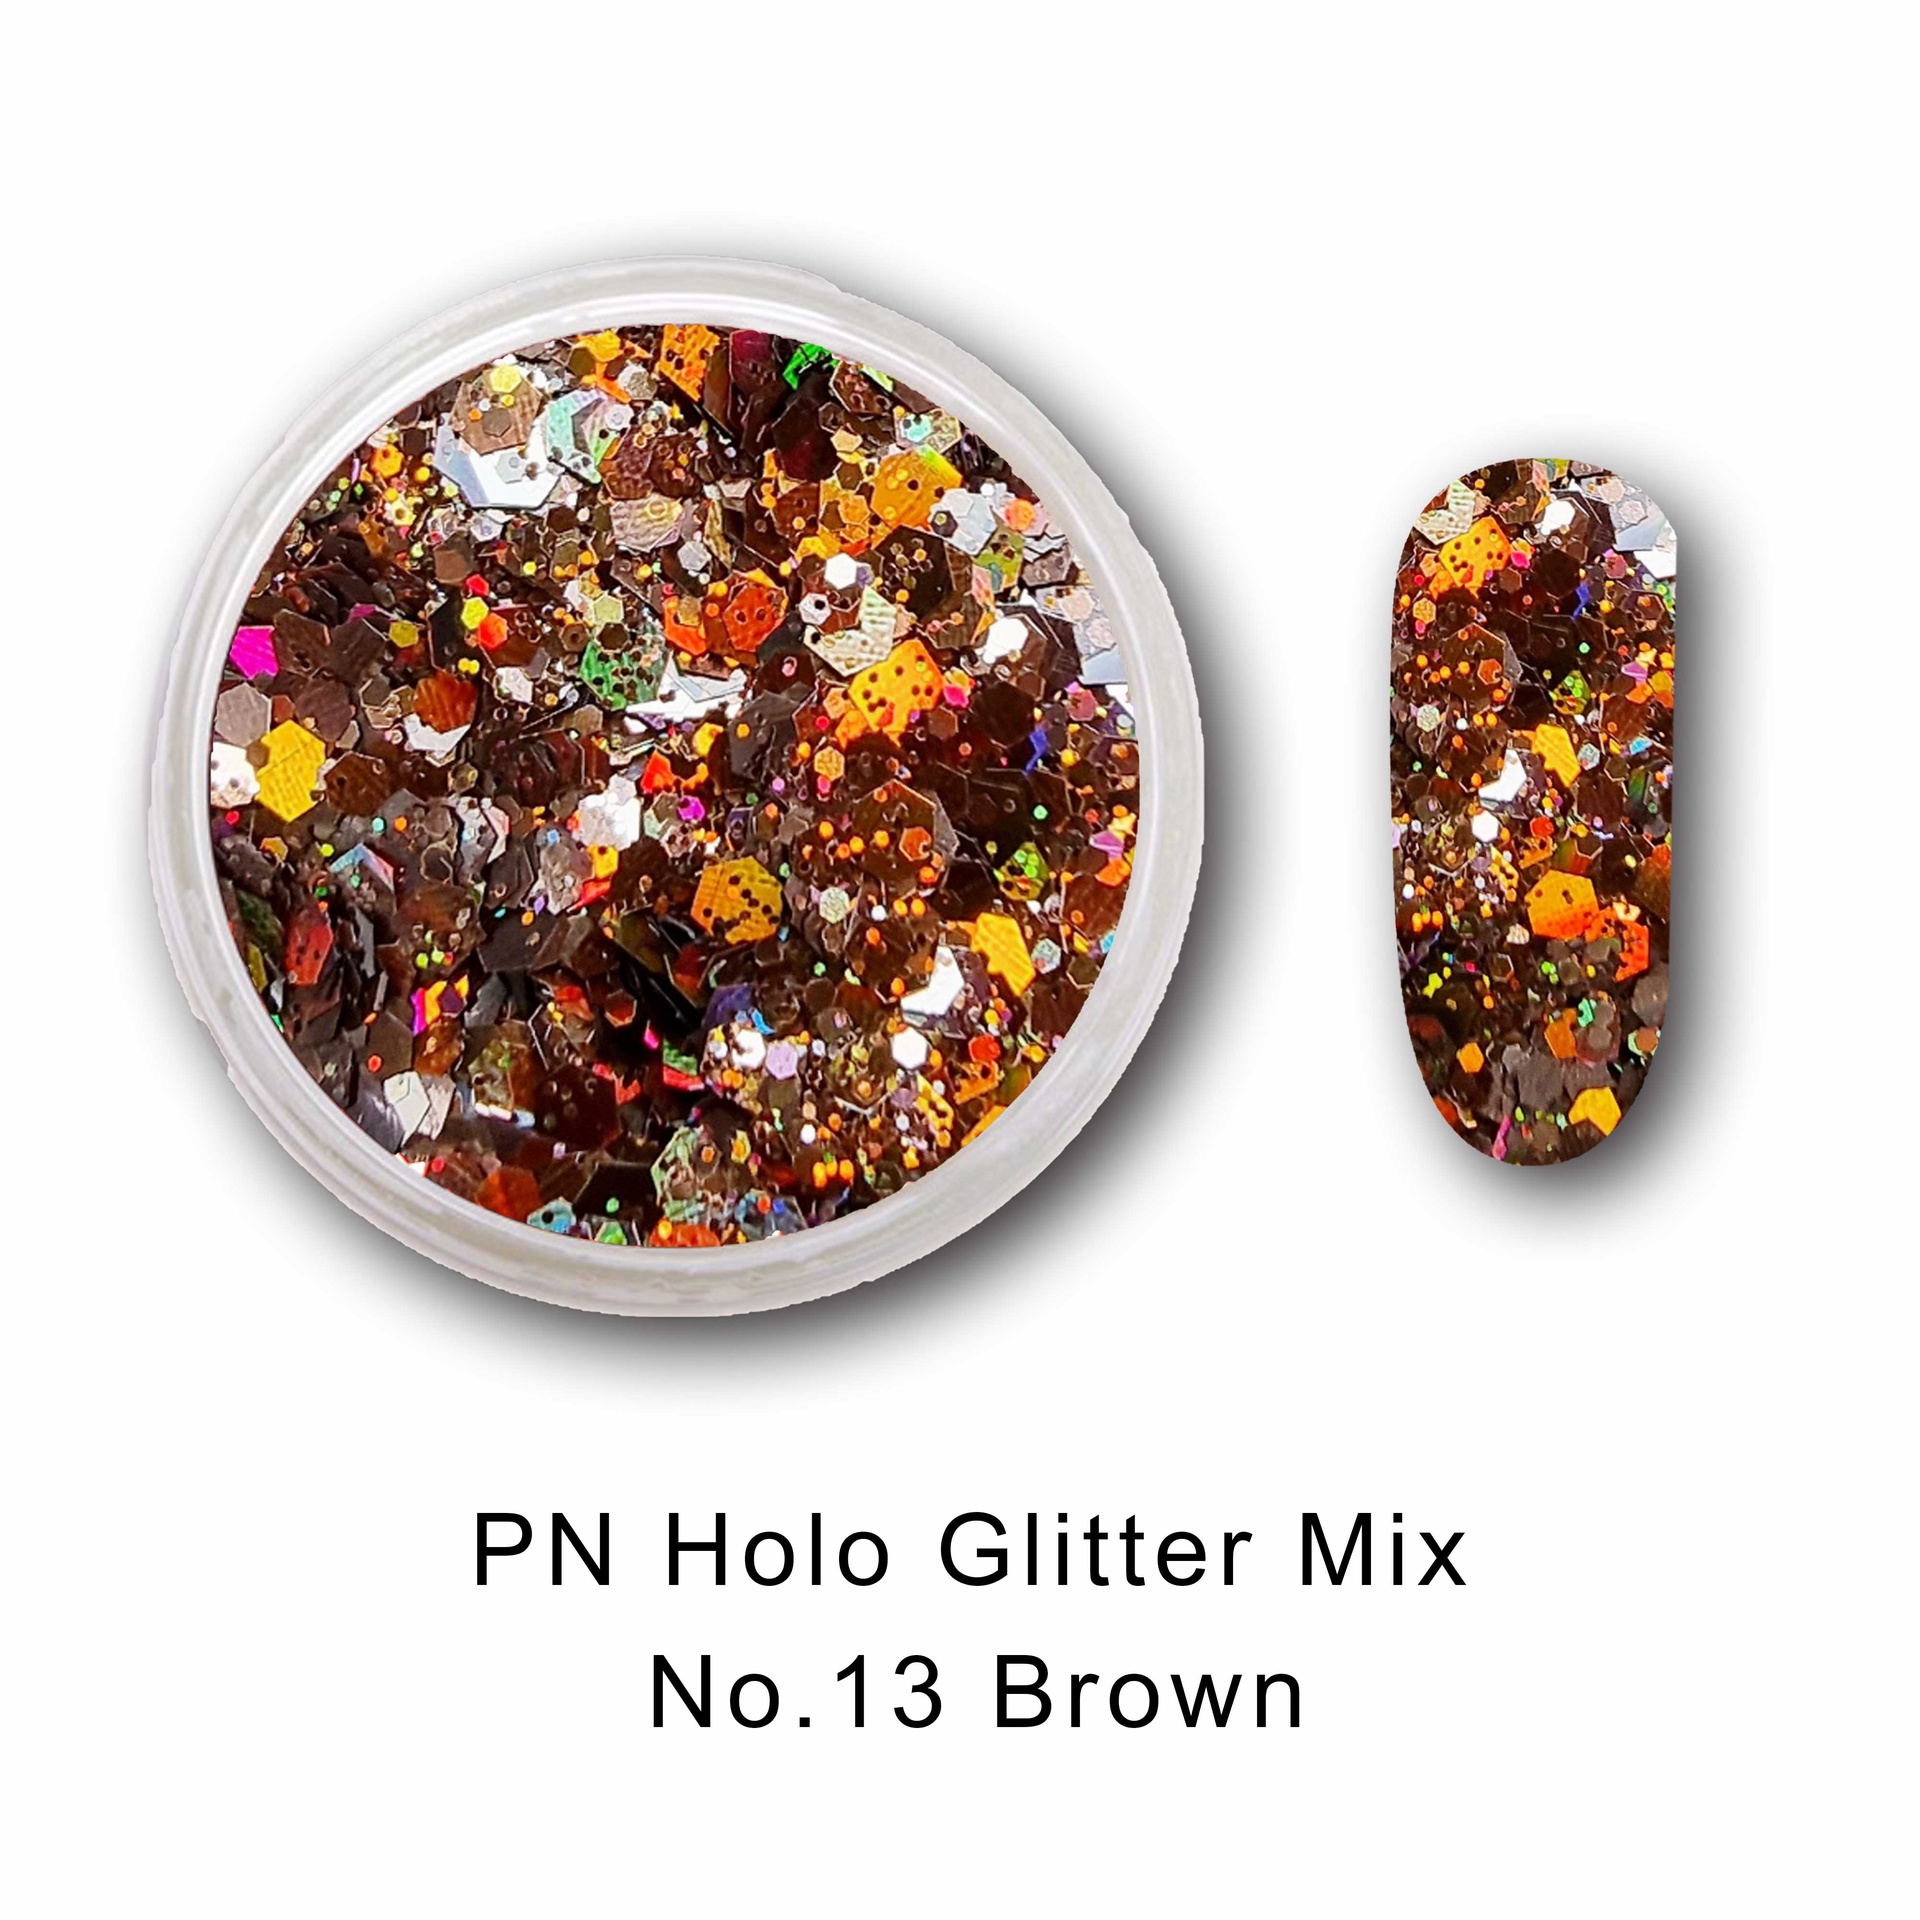 PN Holo glitter mix No.13 Brown